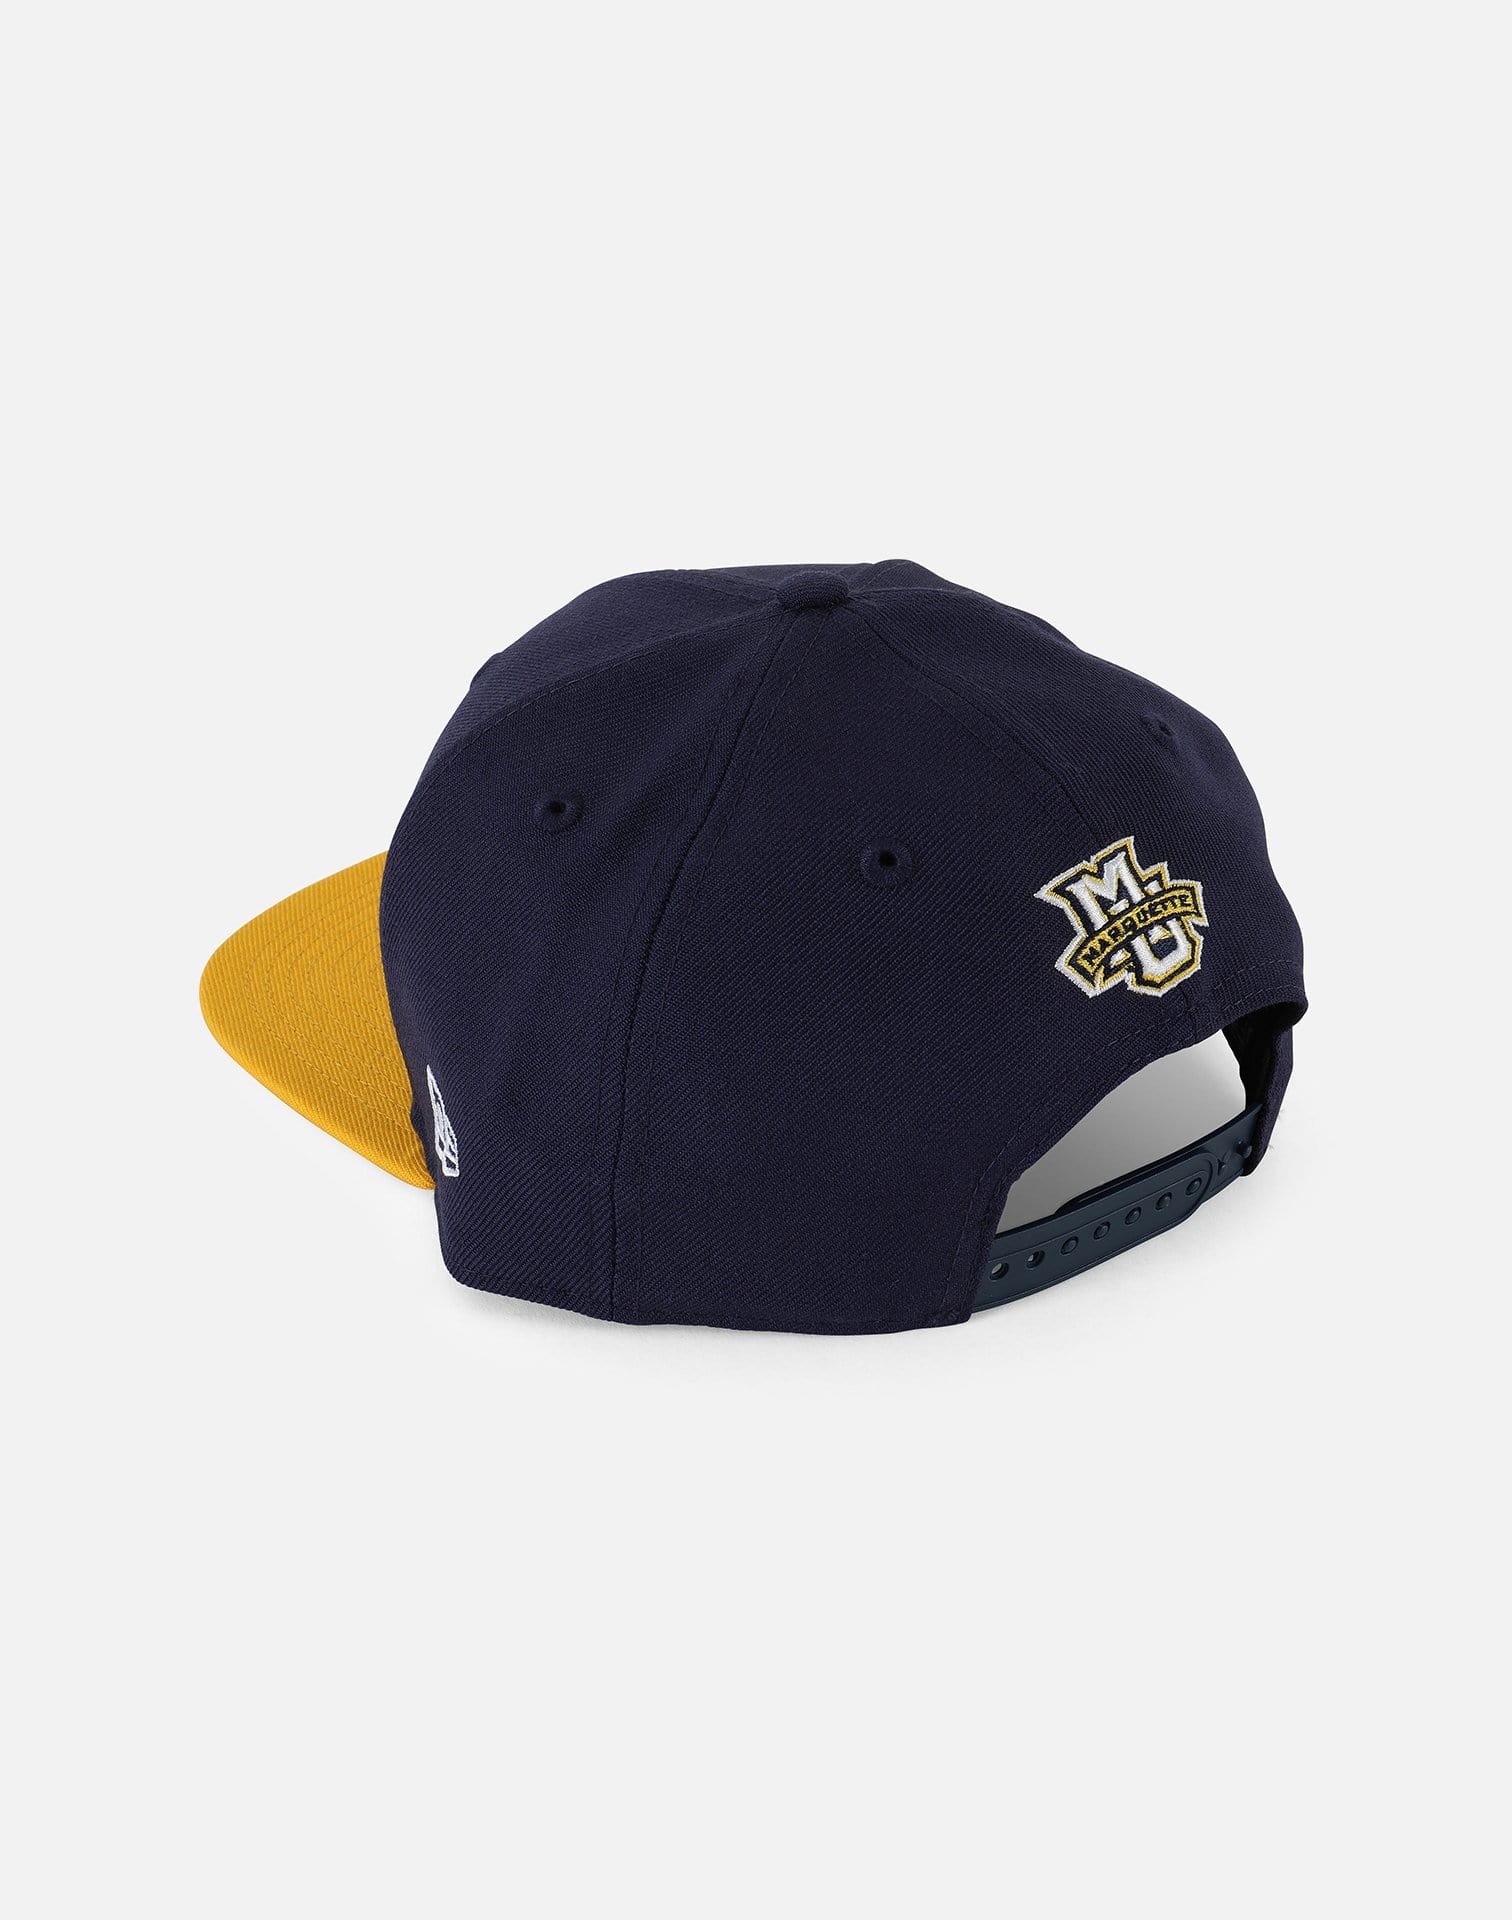 New Era 9FIFTY Marquette University Snapback Hat